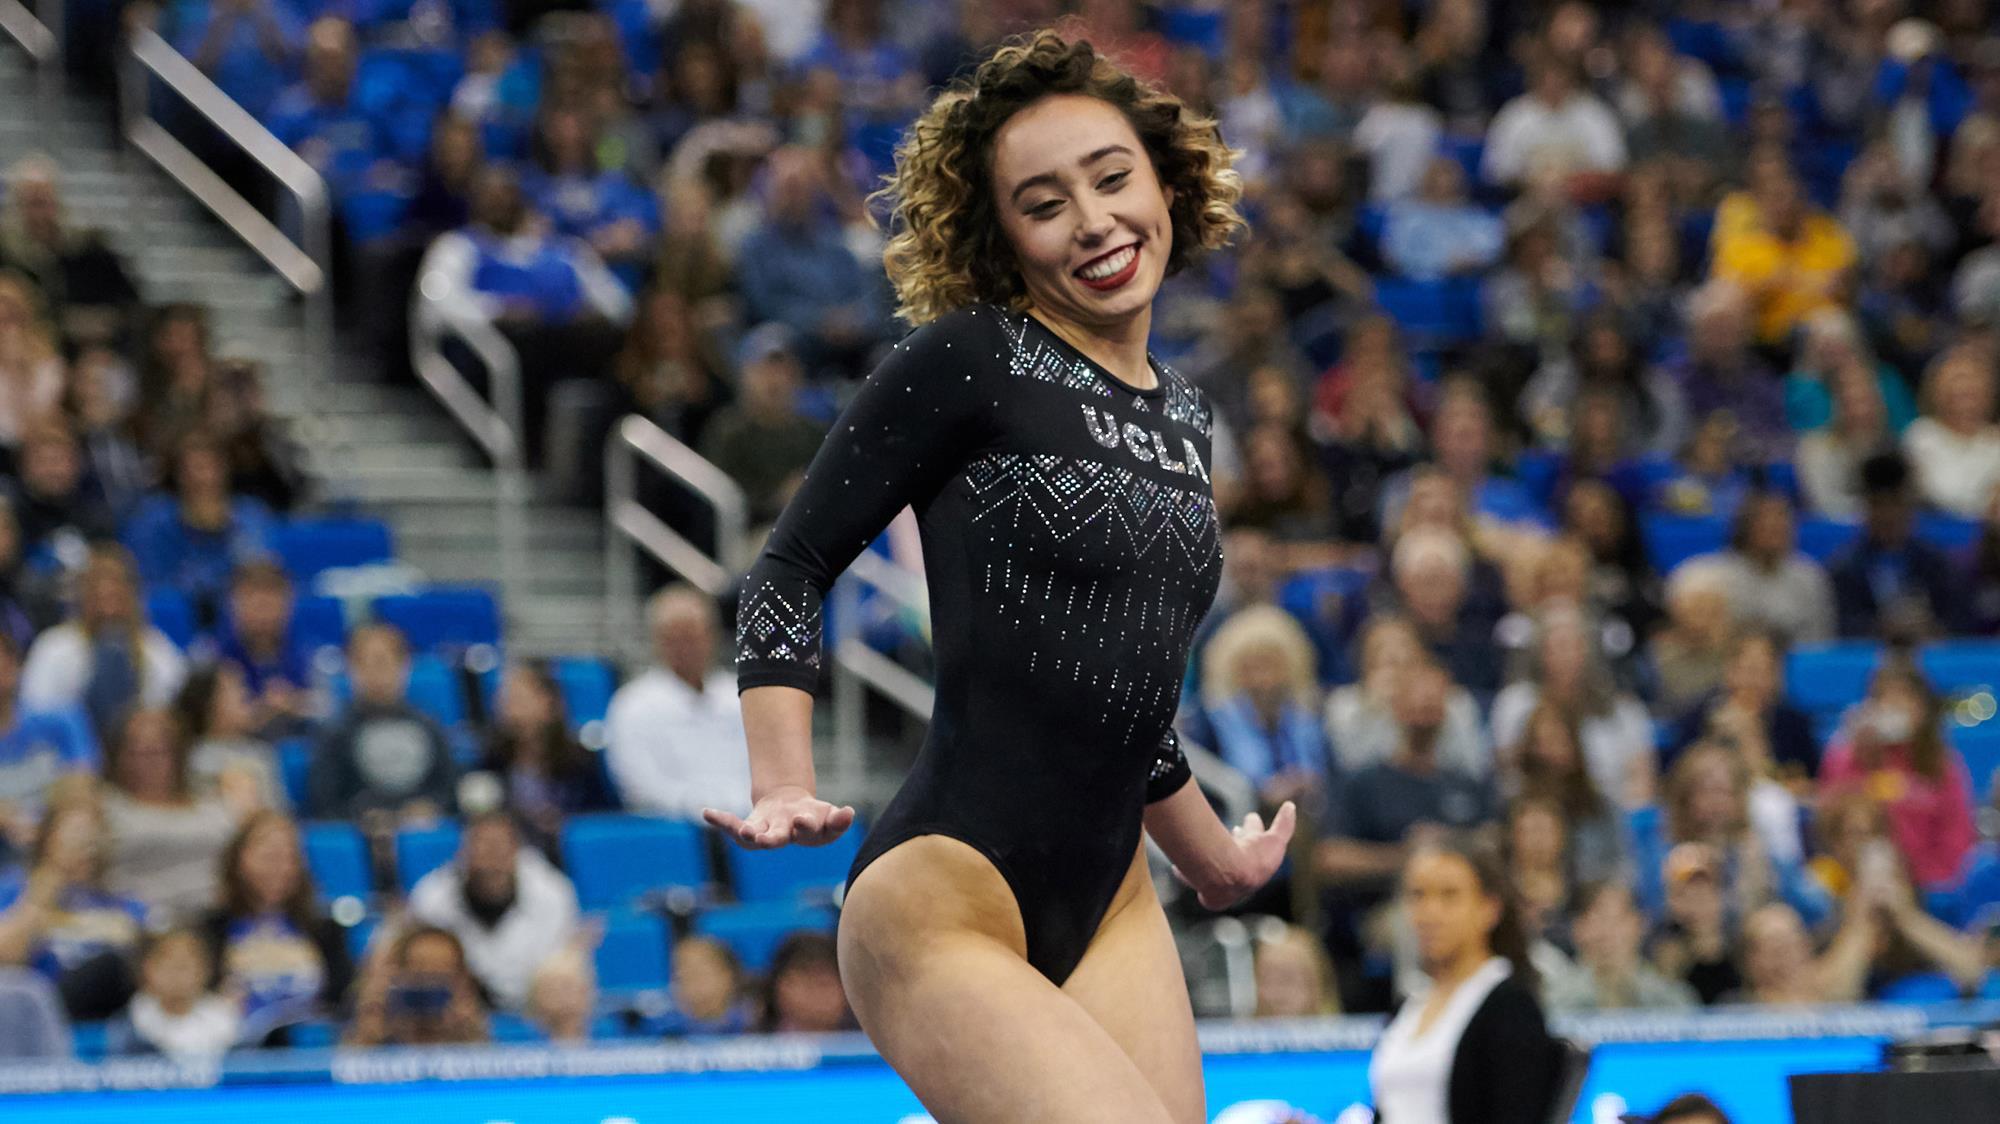 UCLA Gymnastics' Katelyn Ohashi & her floor routine will make your day